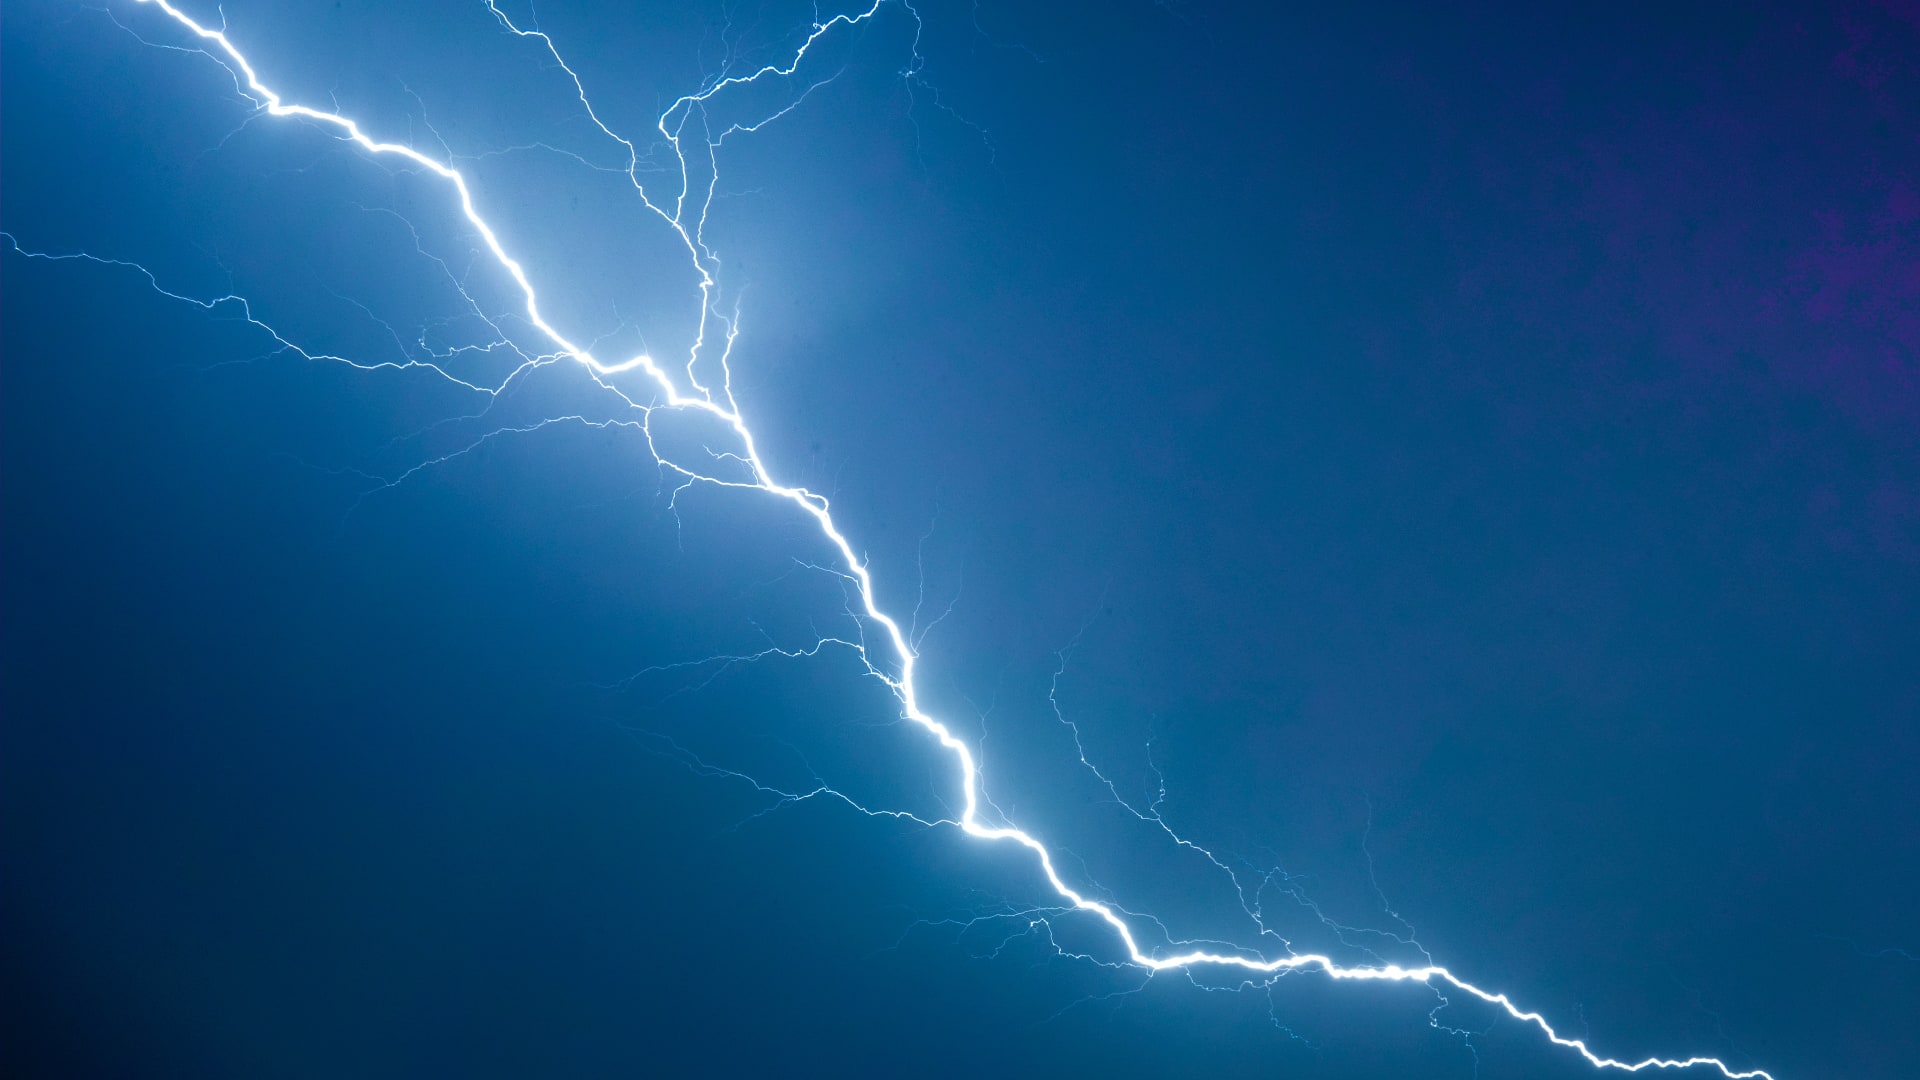 Lightning bolt strikes in the sky during storm